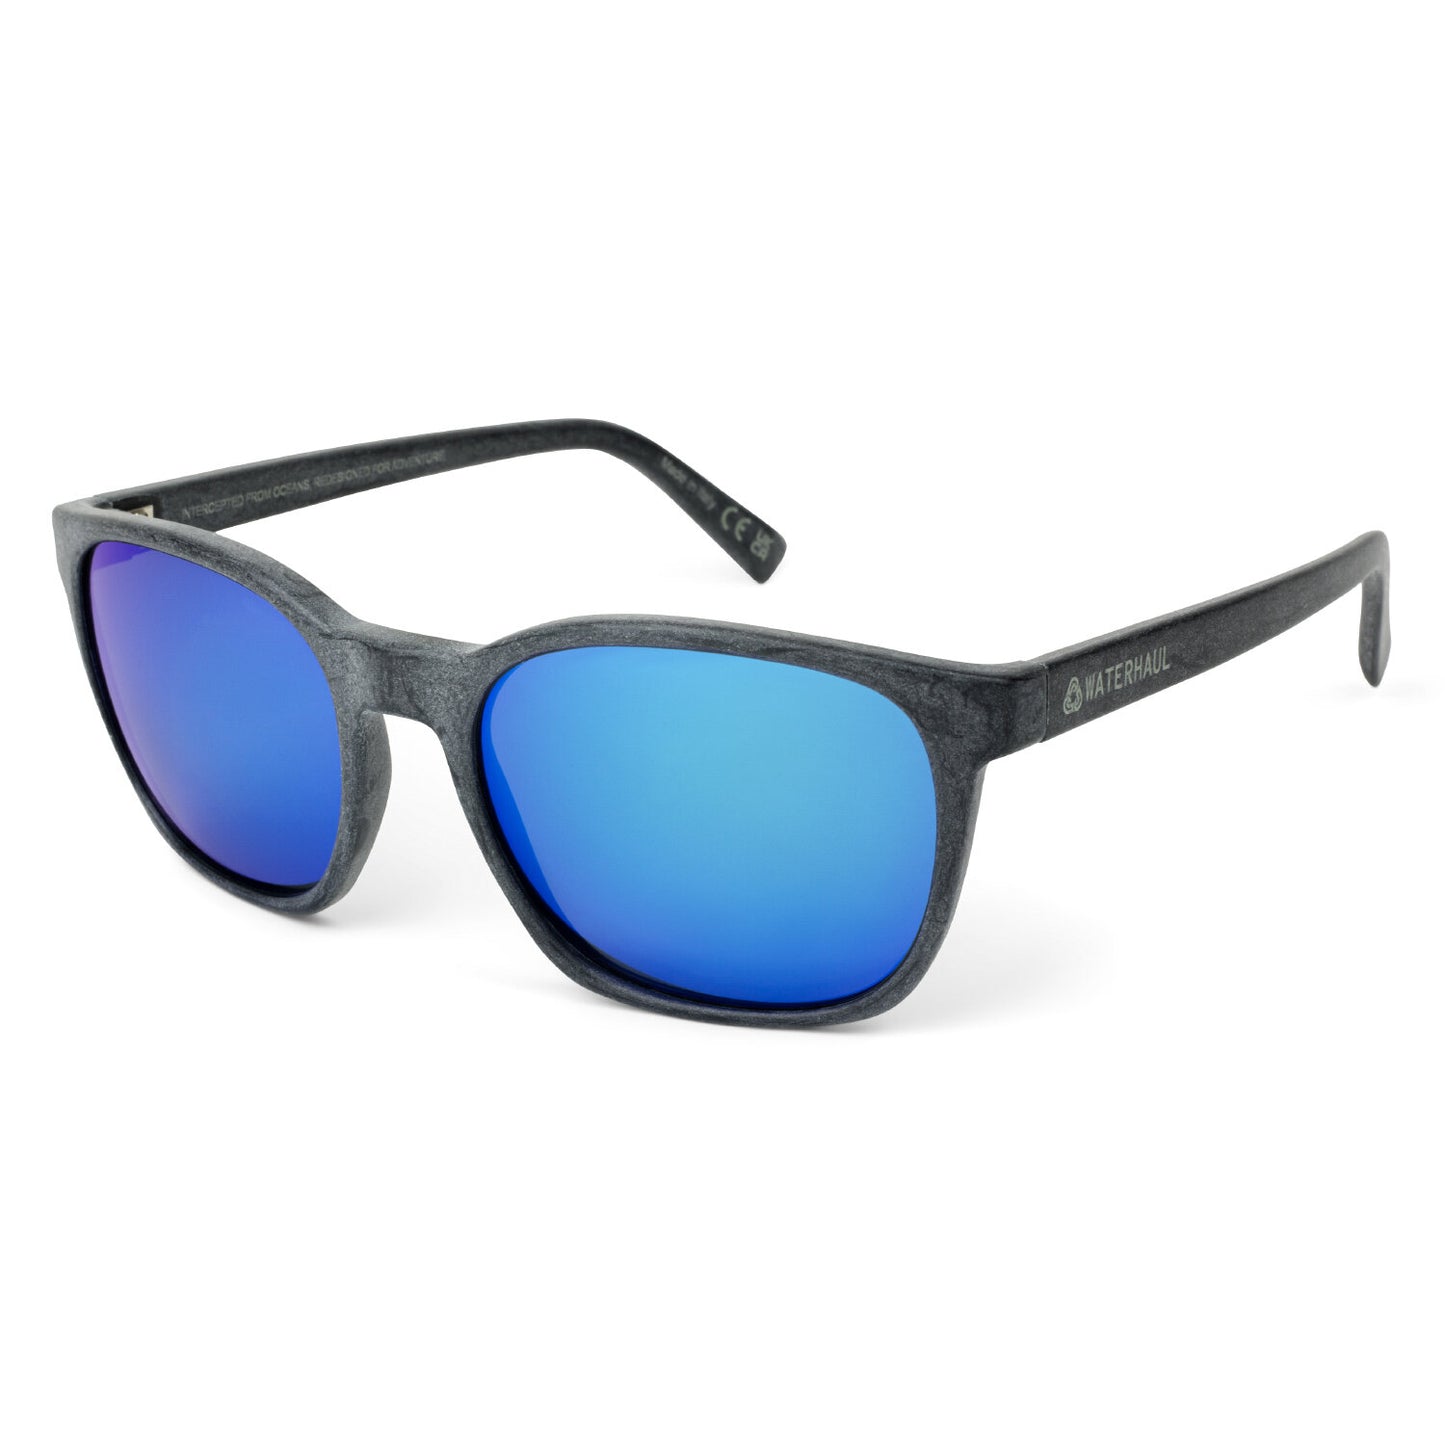 Waterhaul Fitzroy slate sunglasses - polarised blue mirror lens